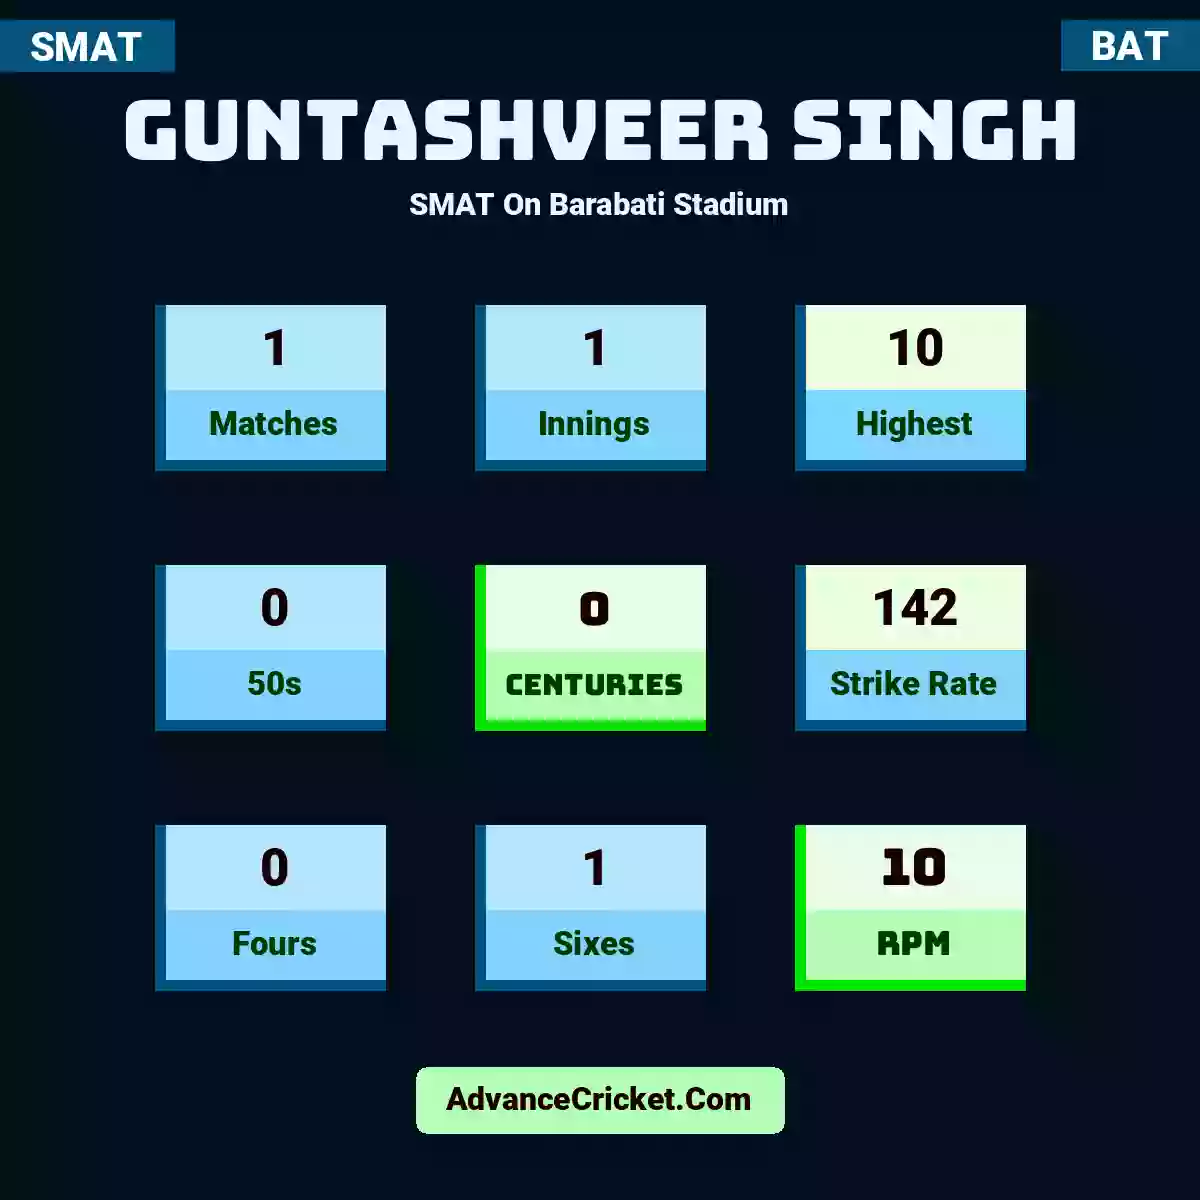 Guntashveer Singh SMAT  On Barabati Stadium, Guntashveer Singh played 1 matches, scored 10 runs as highest, 0 half-centuries, and 0 centuries, with a strike rate of 142. G.Singh hit 0 fours and 1 sixes, with an RPM of 10.